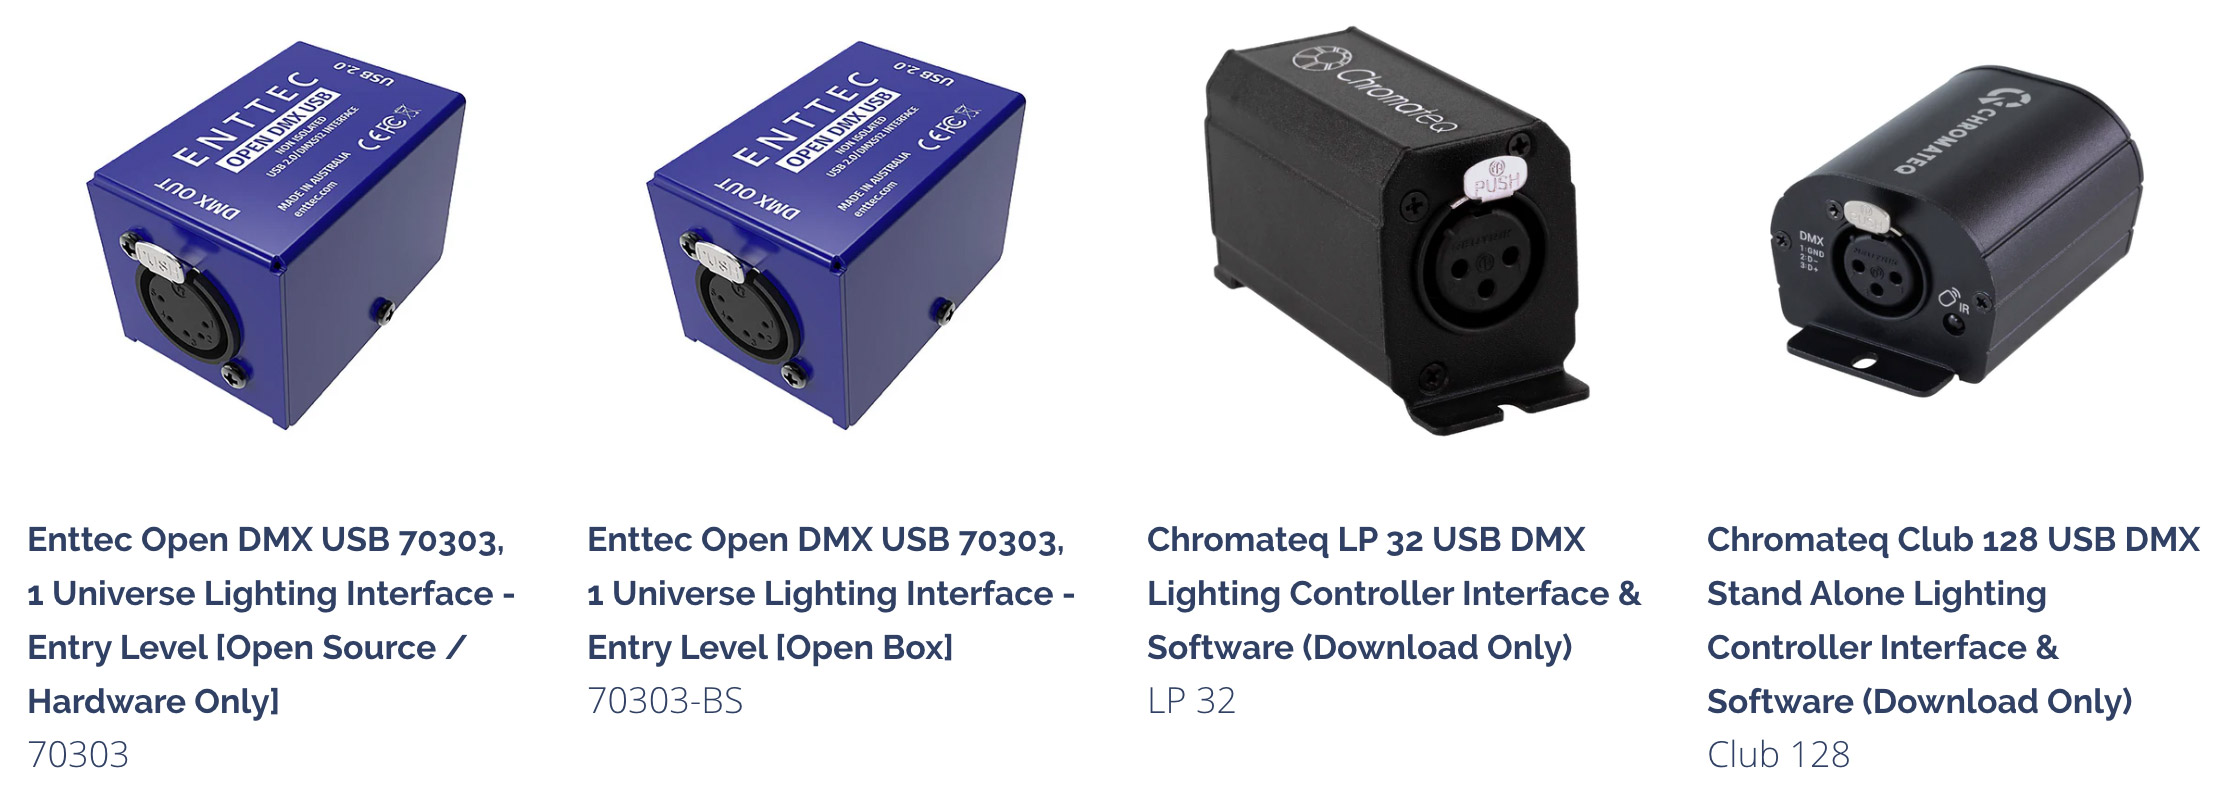 DMX USB Products